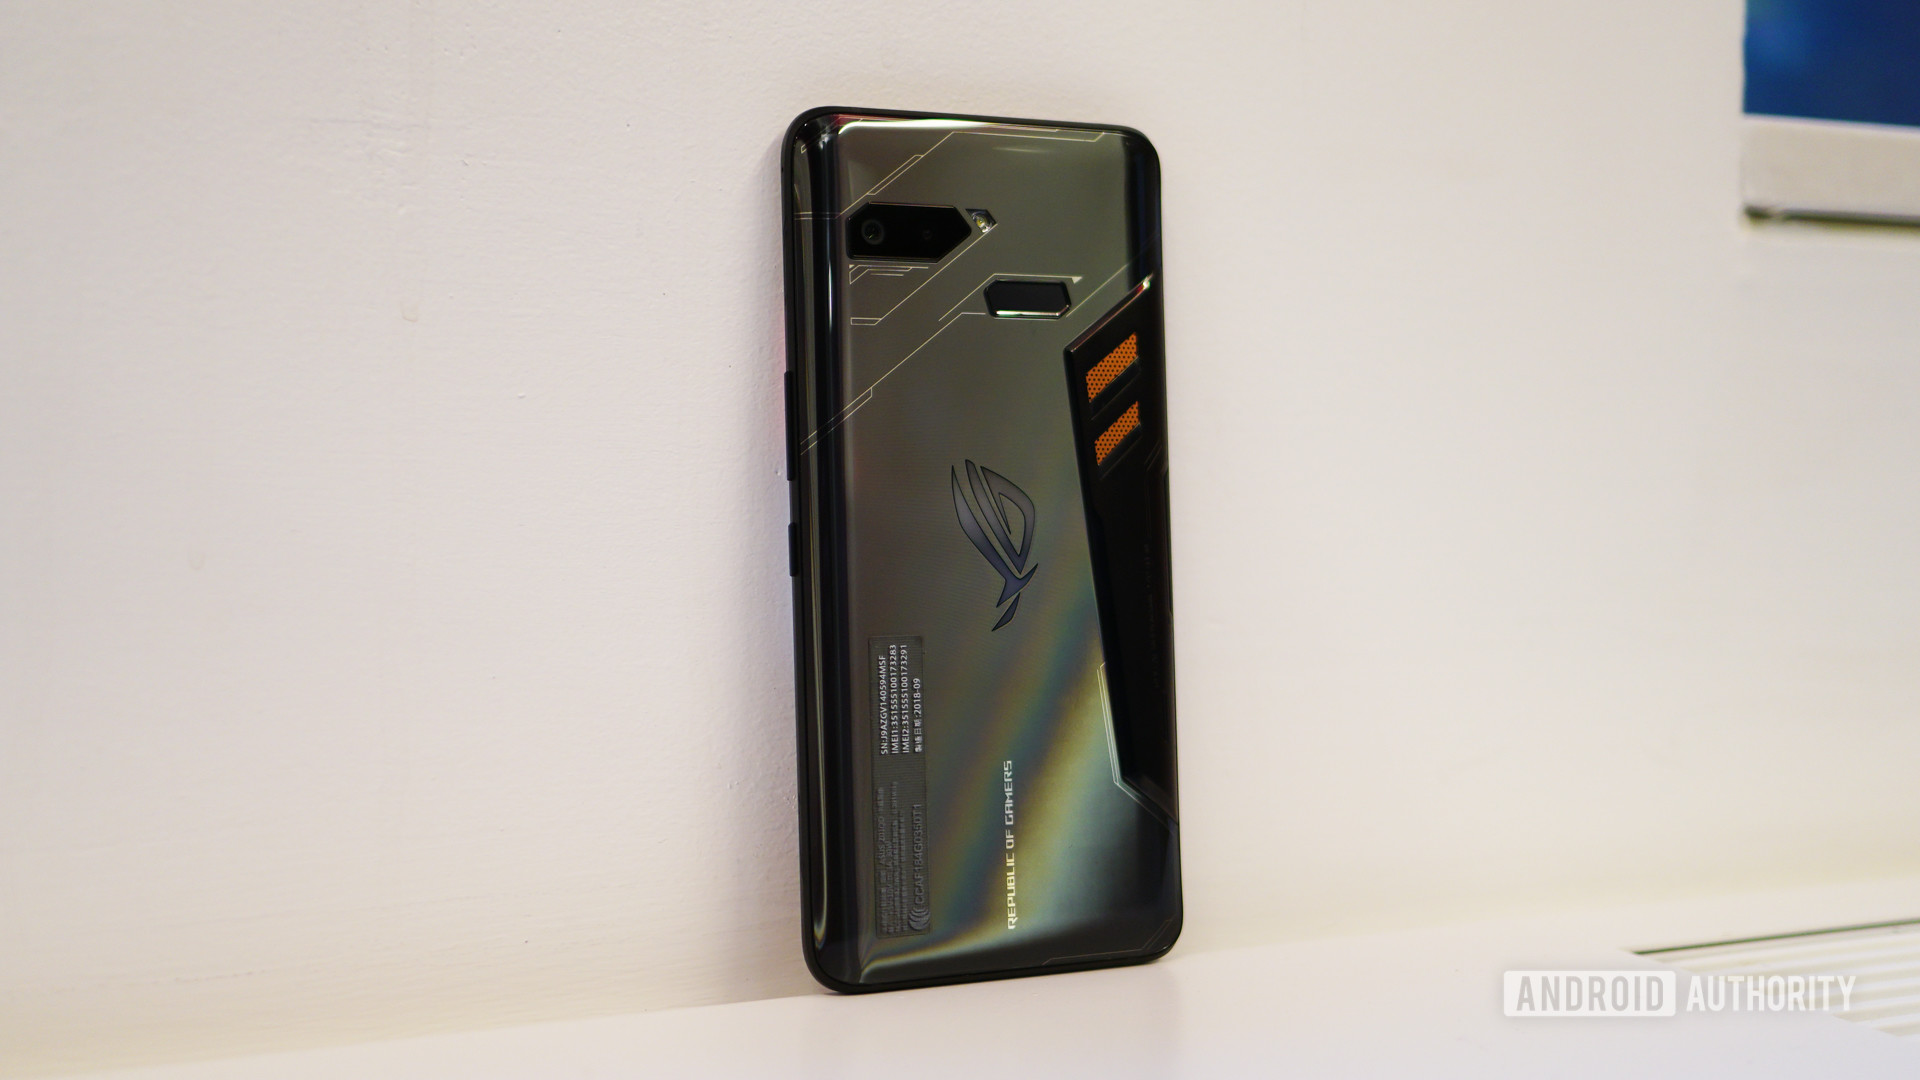 Asus ROG Phone back design